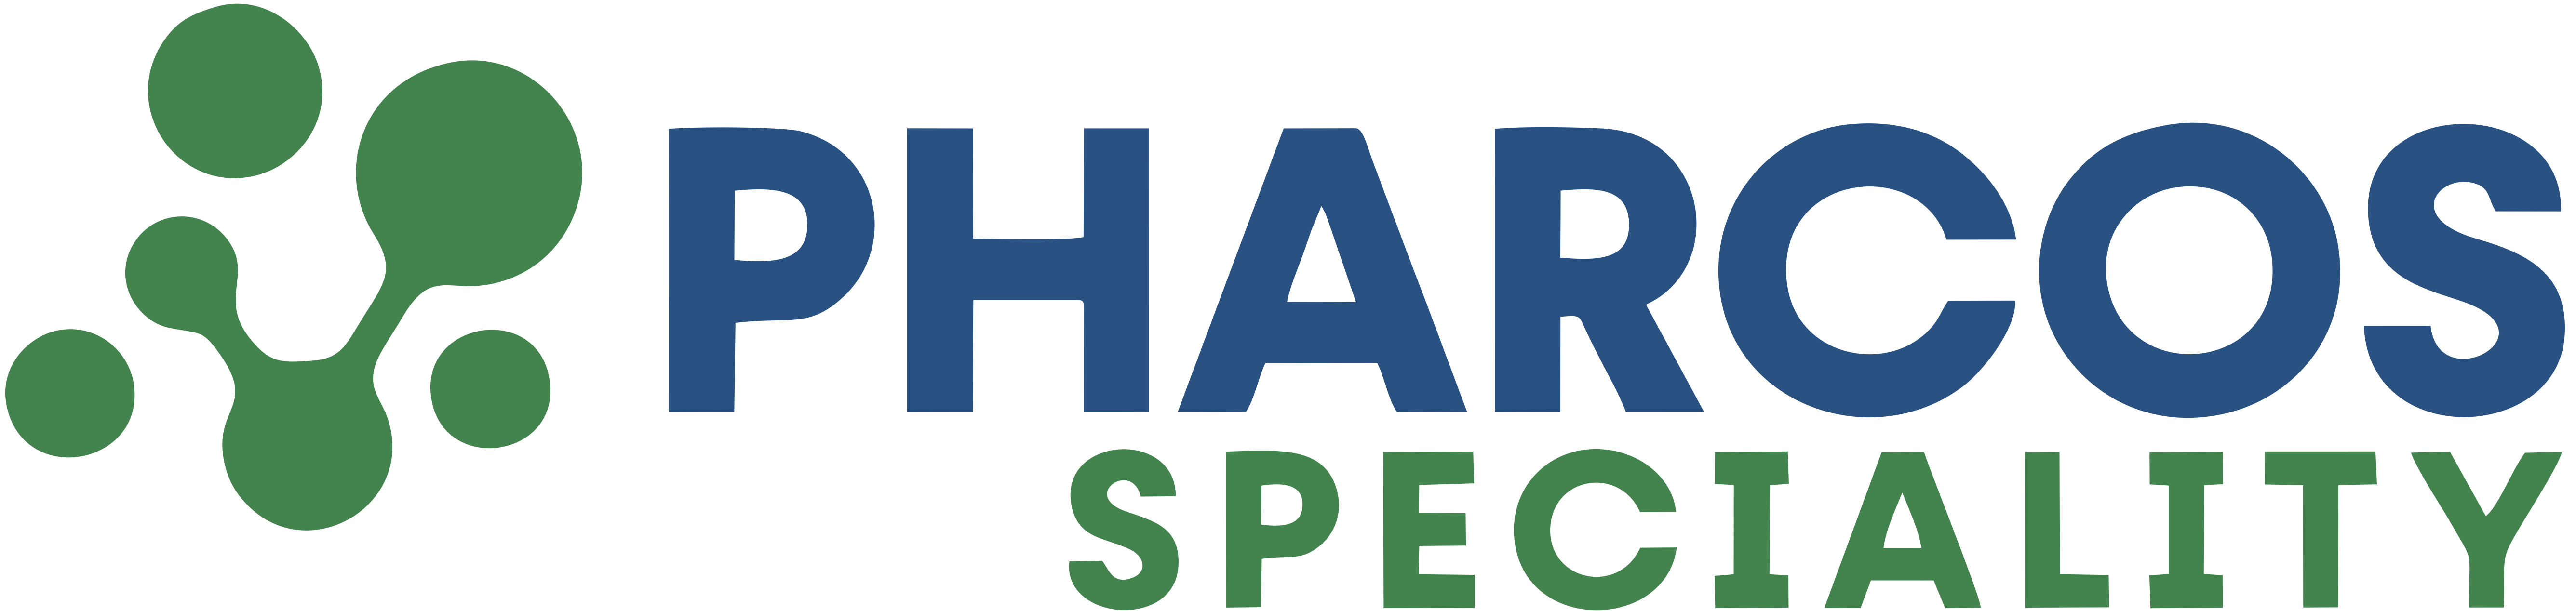 Pharcos Speciality Ltd